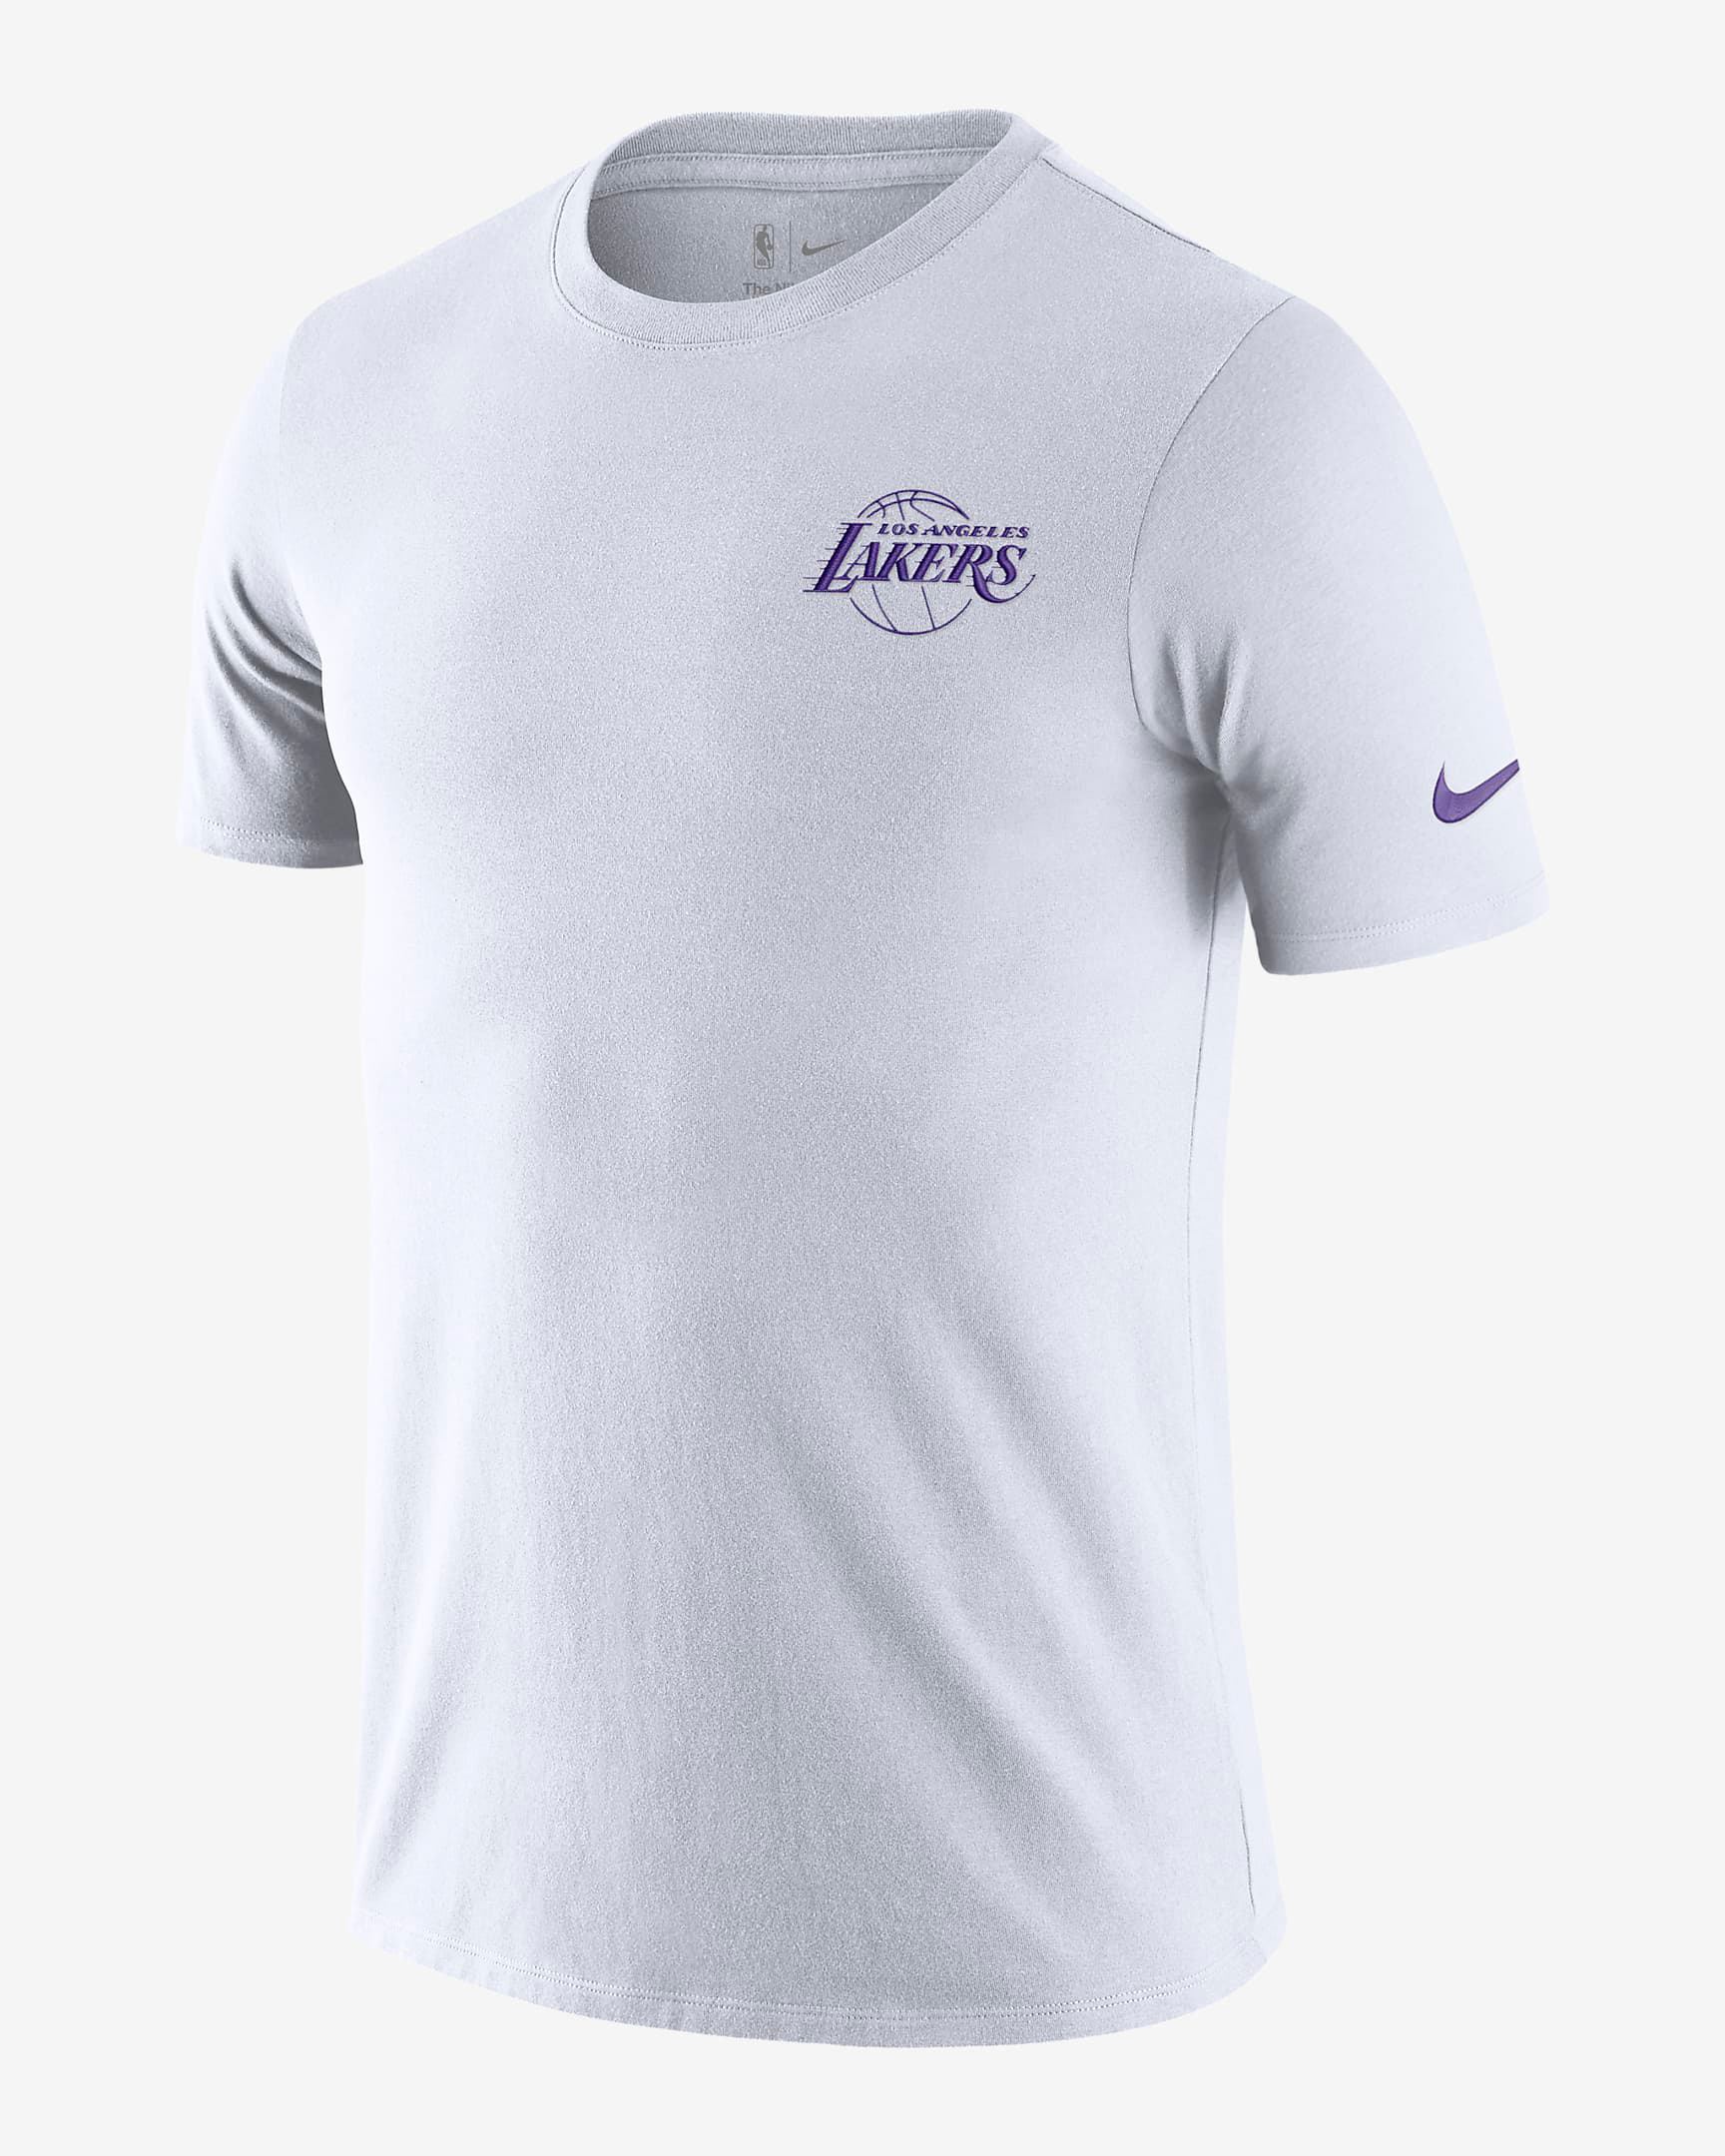 nike-dunk-low-championship-court-purple-lakers-t-shirt